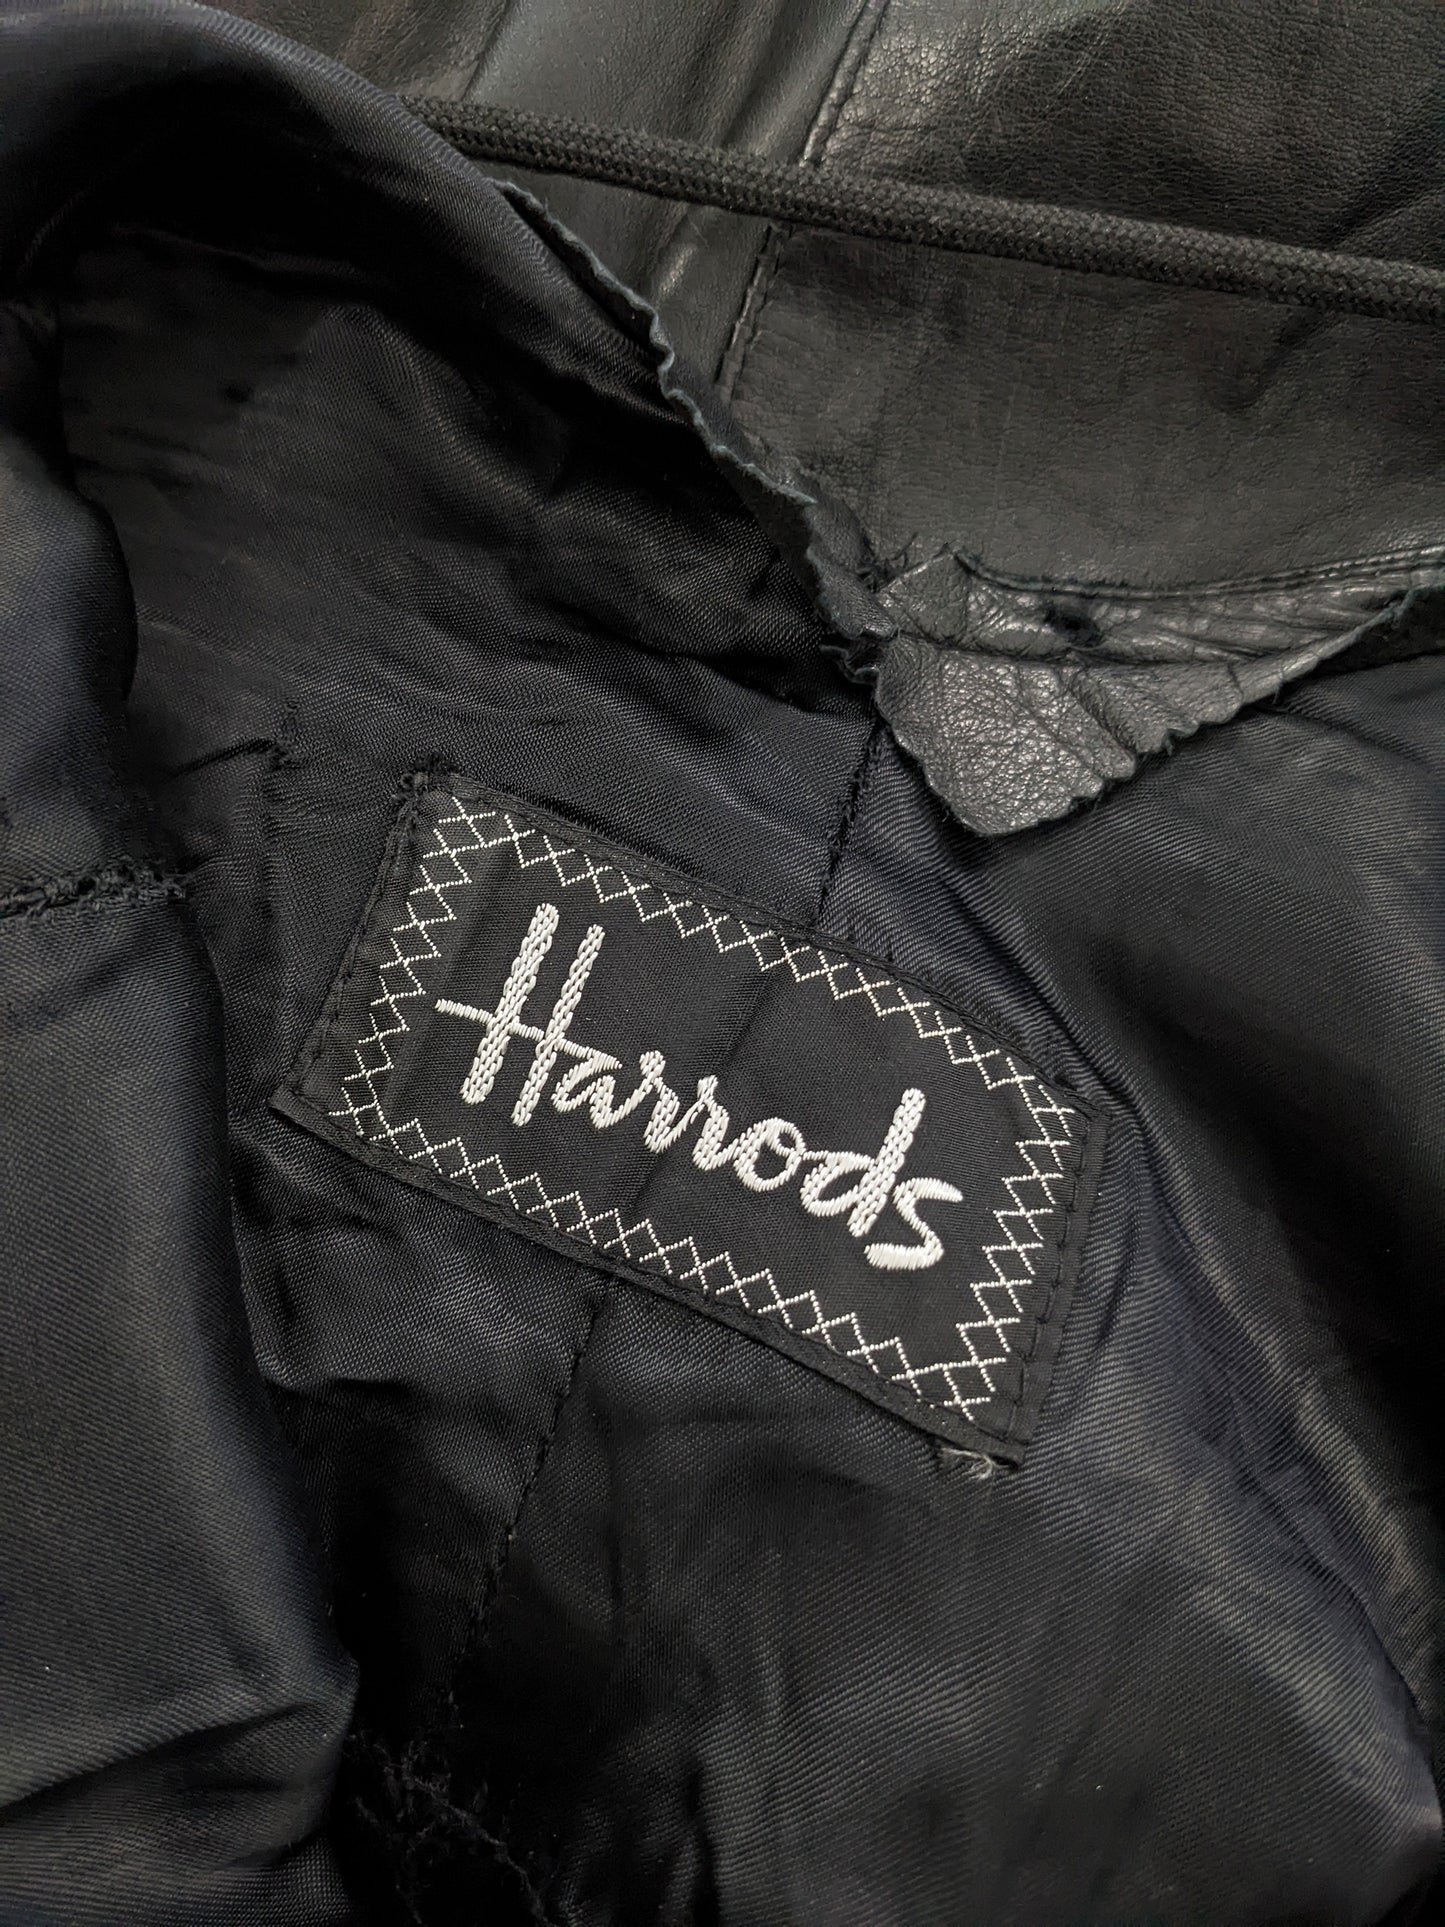 Harrods Vintage Real Leather Lace Back Dress, 1980s